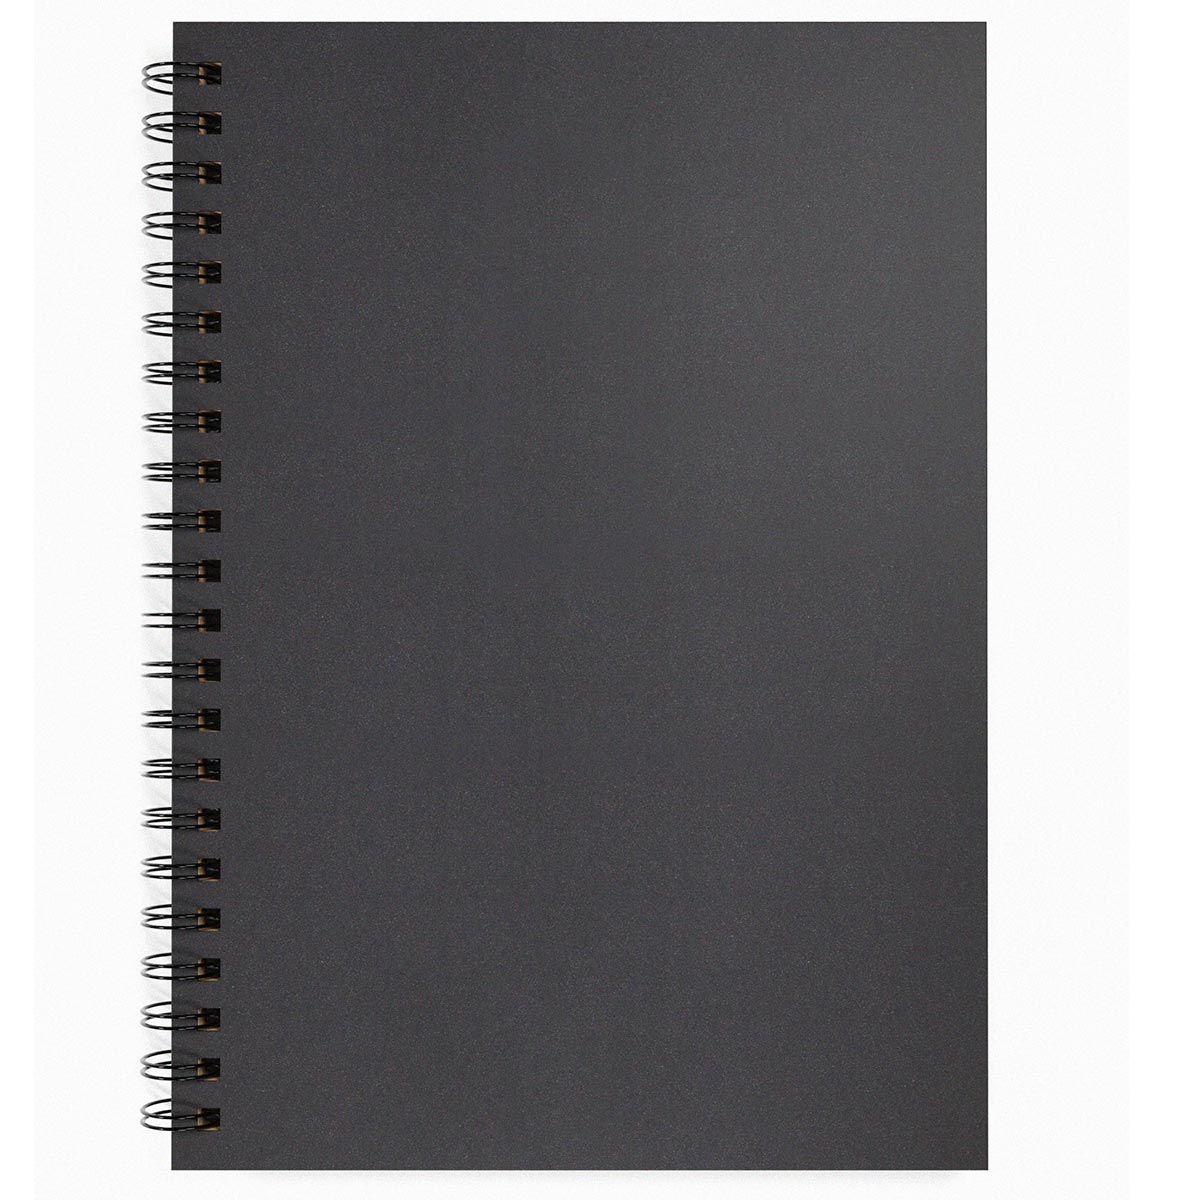 Artgecko - Sketchbook di carta abbronzata ombreggiata - A4 Portrait